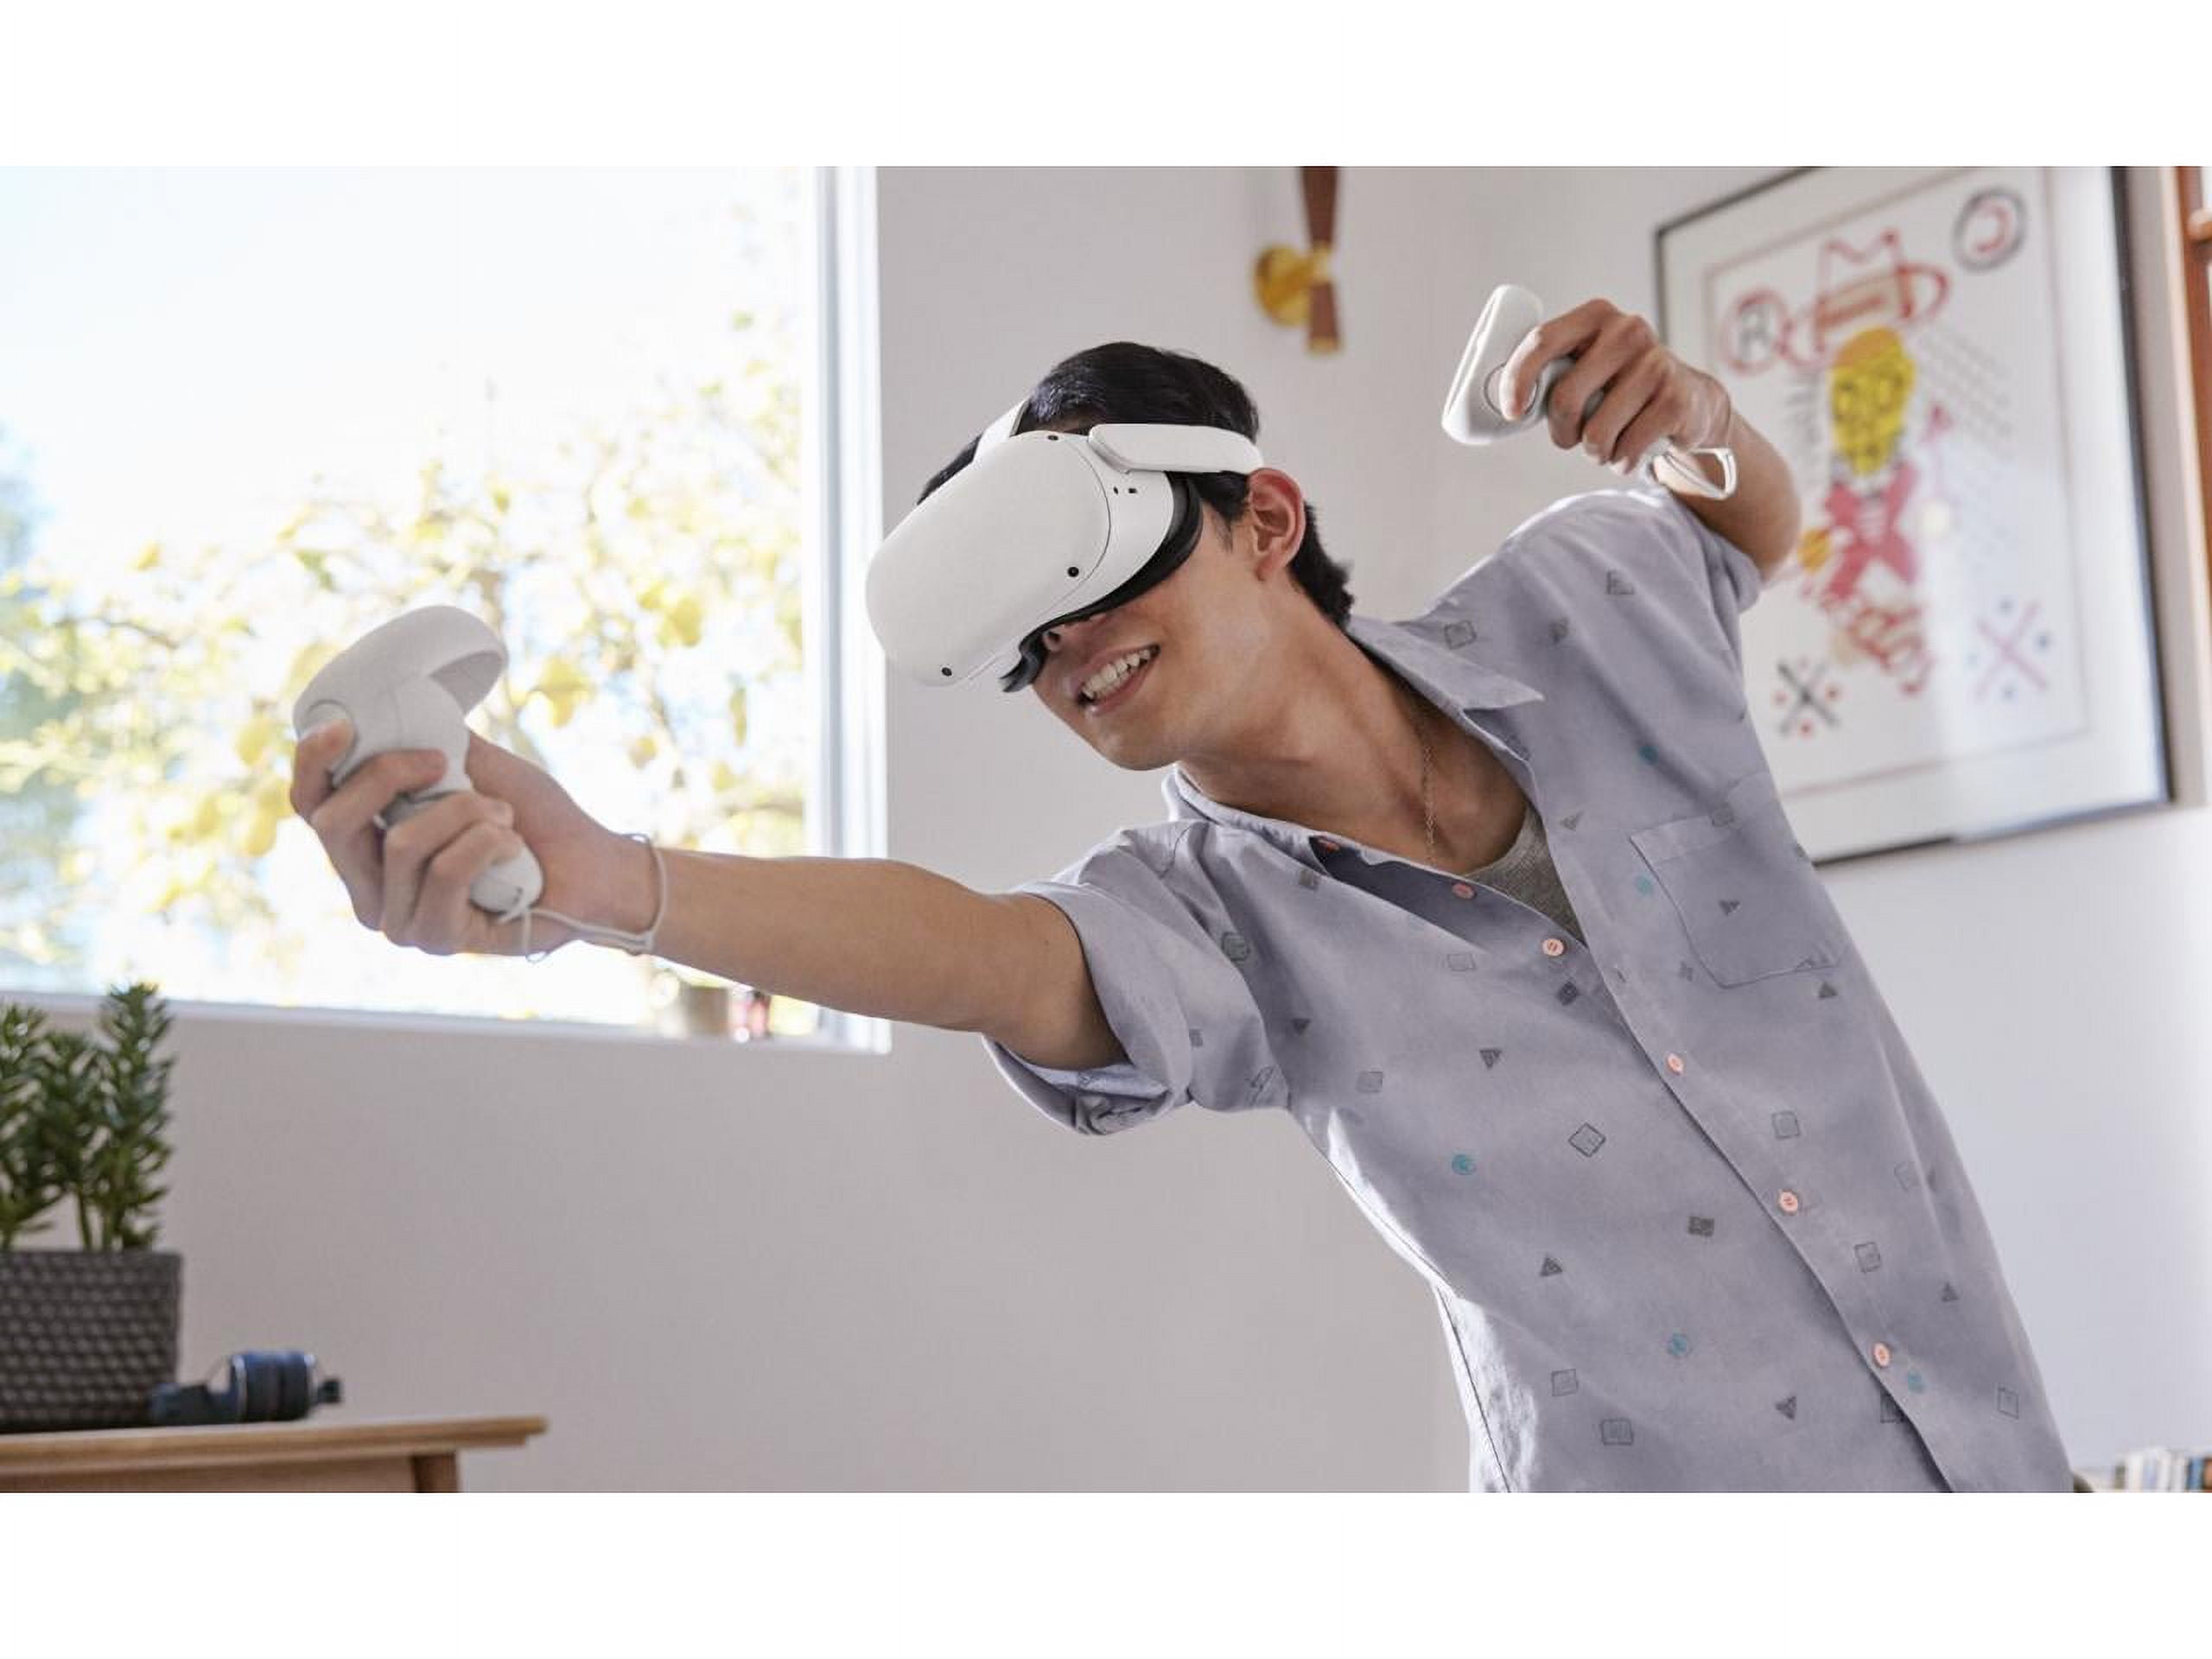 Meta Quest 2 — All-in-One Wireless VR Headset — 256GB - Walmart.com